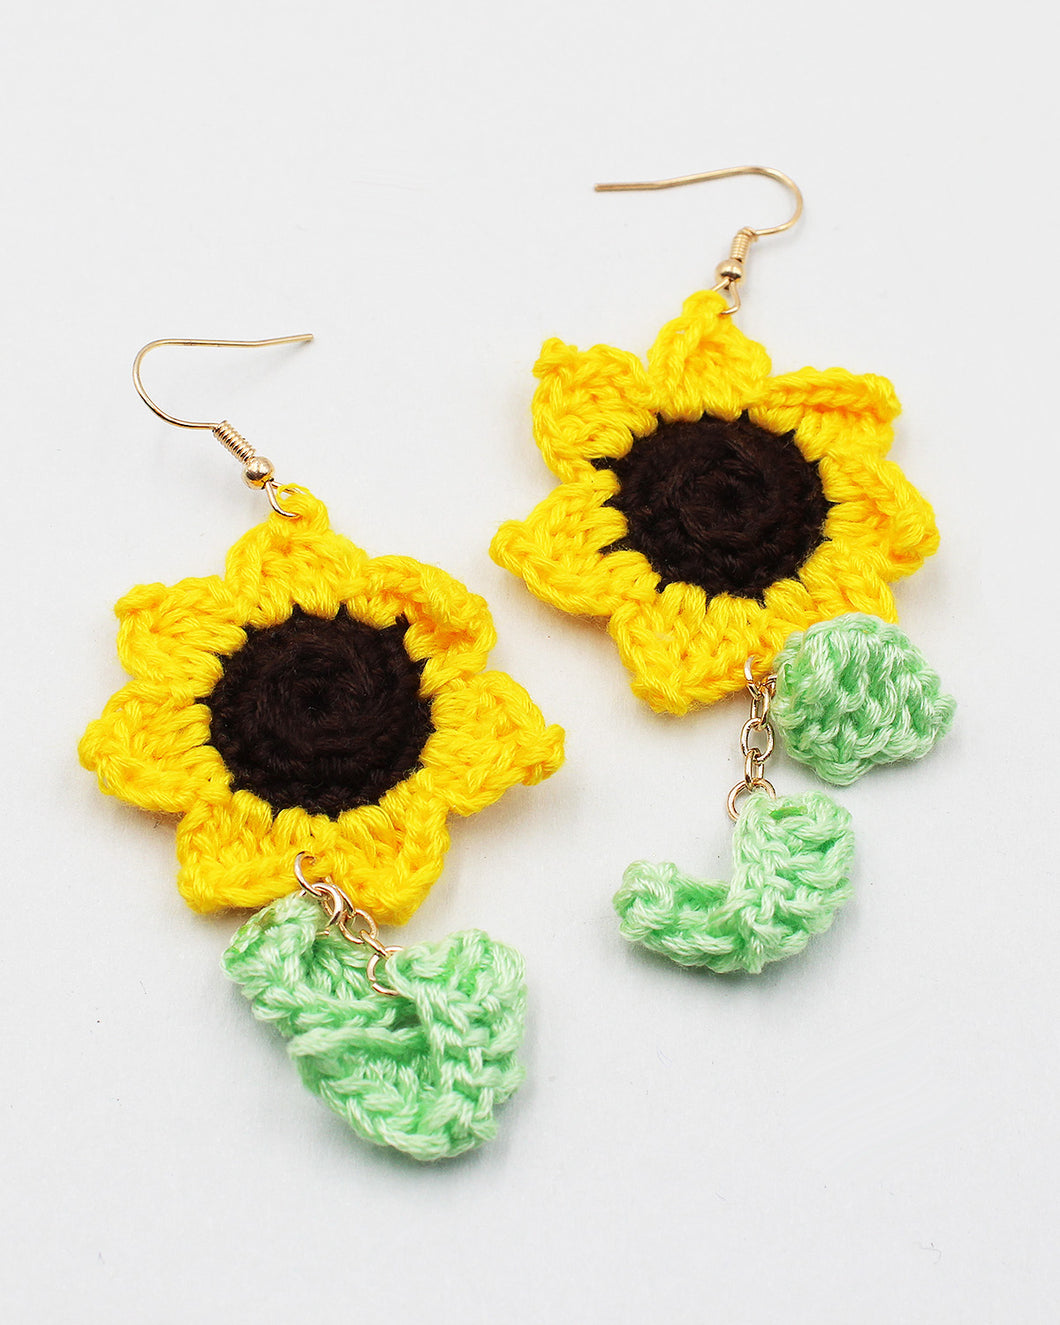 Copy of Hand Knitted Sunflower Earrings